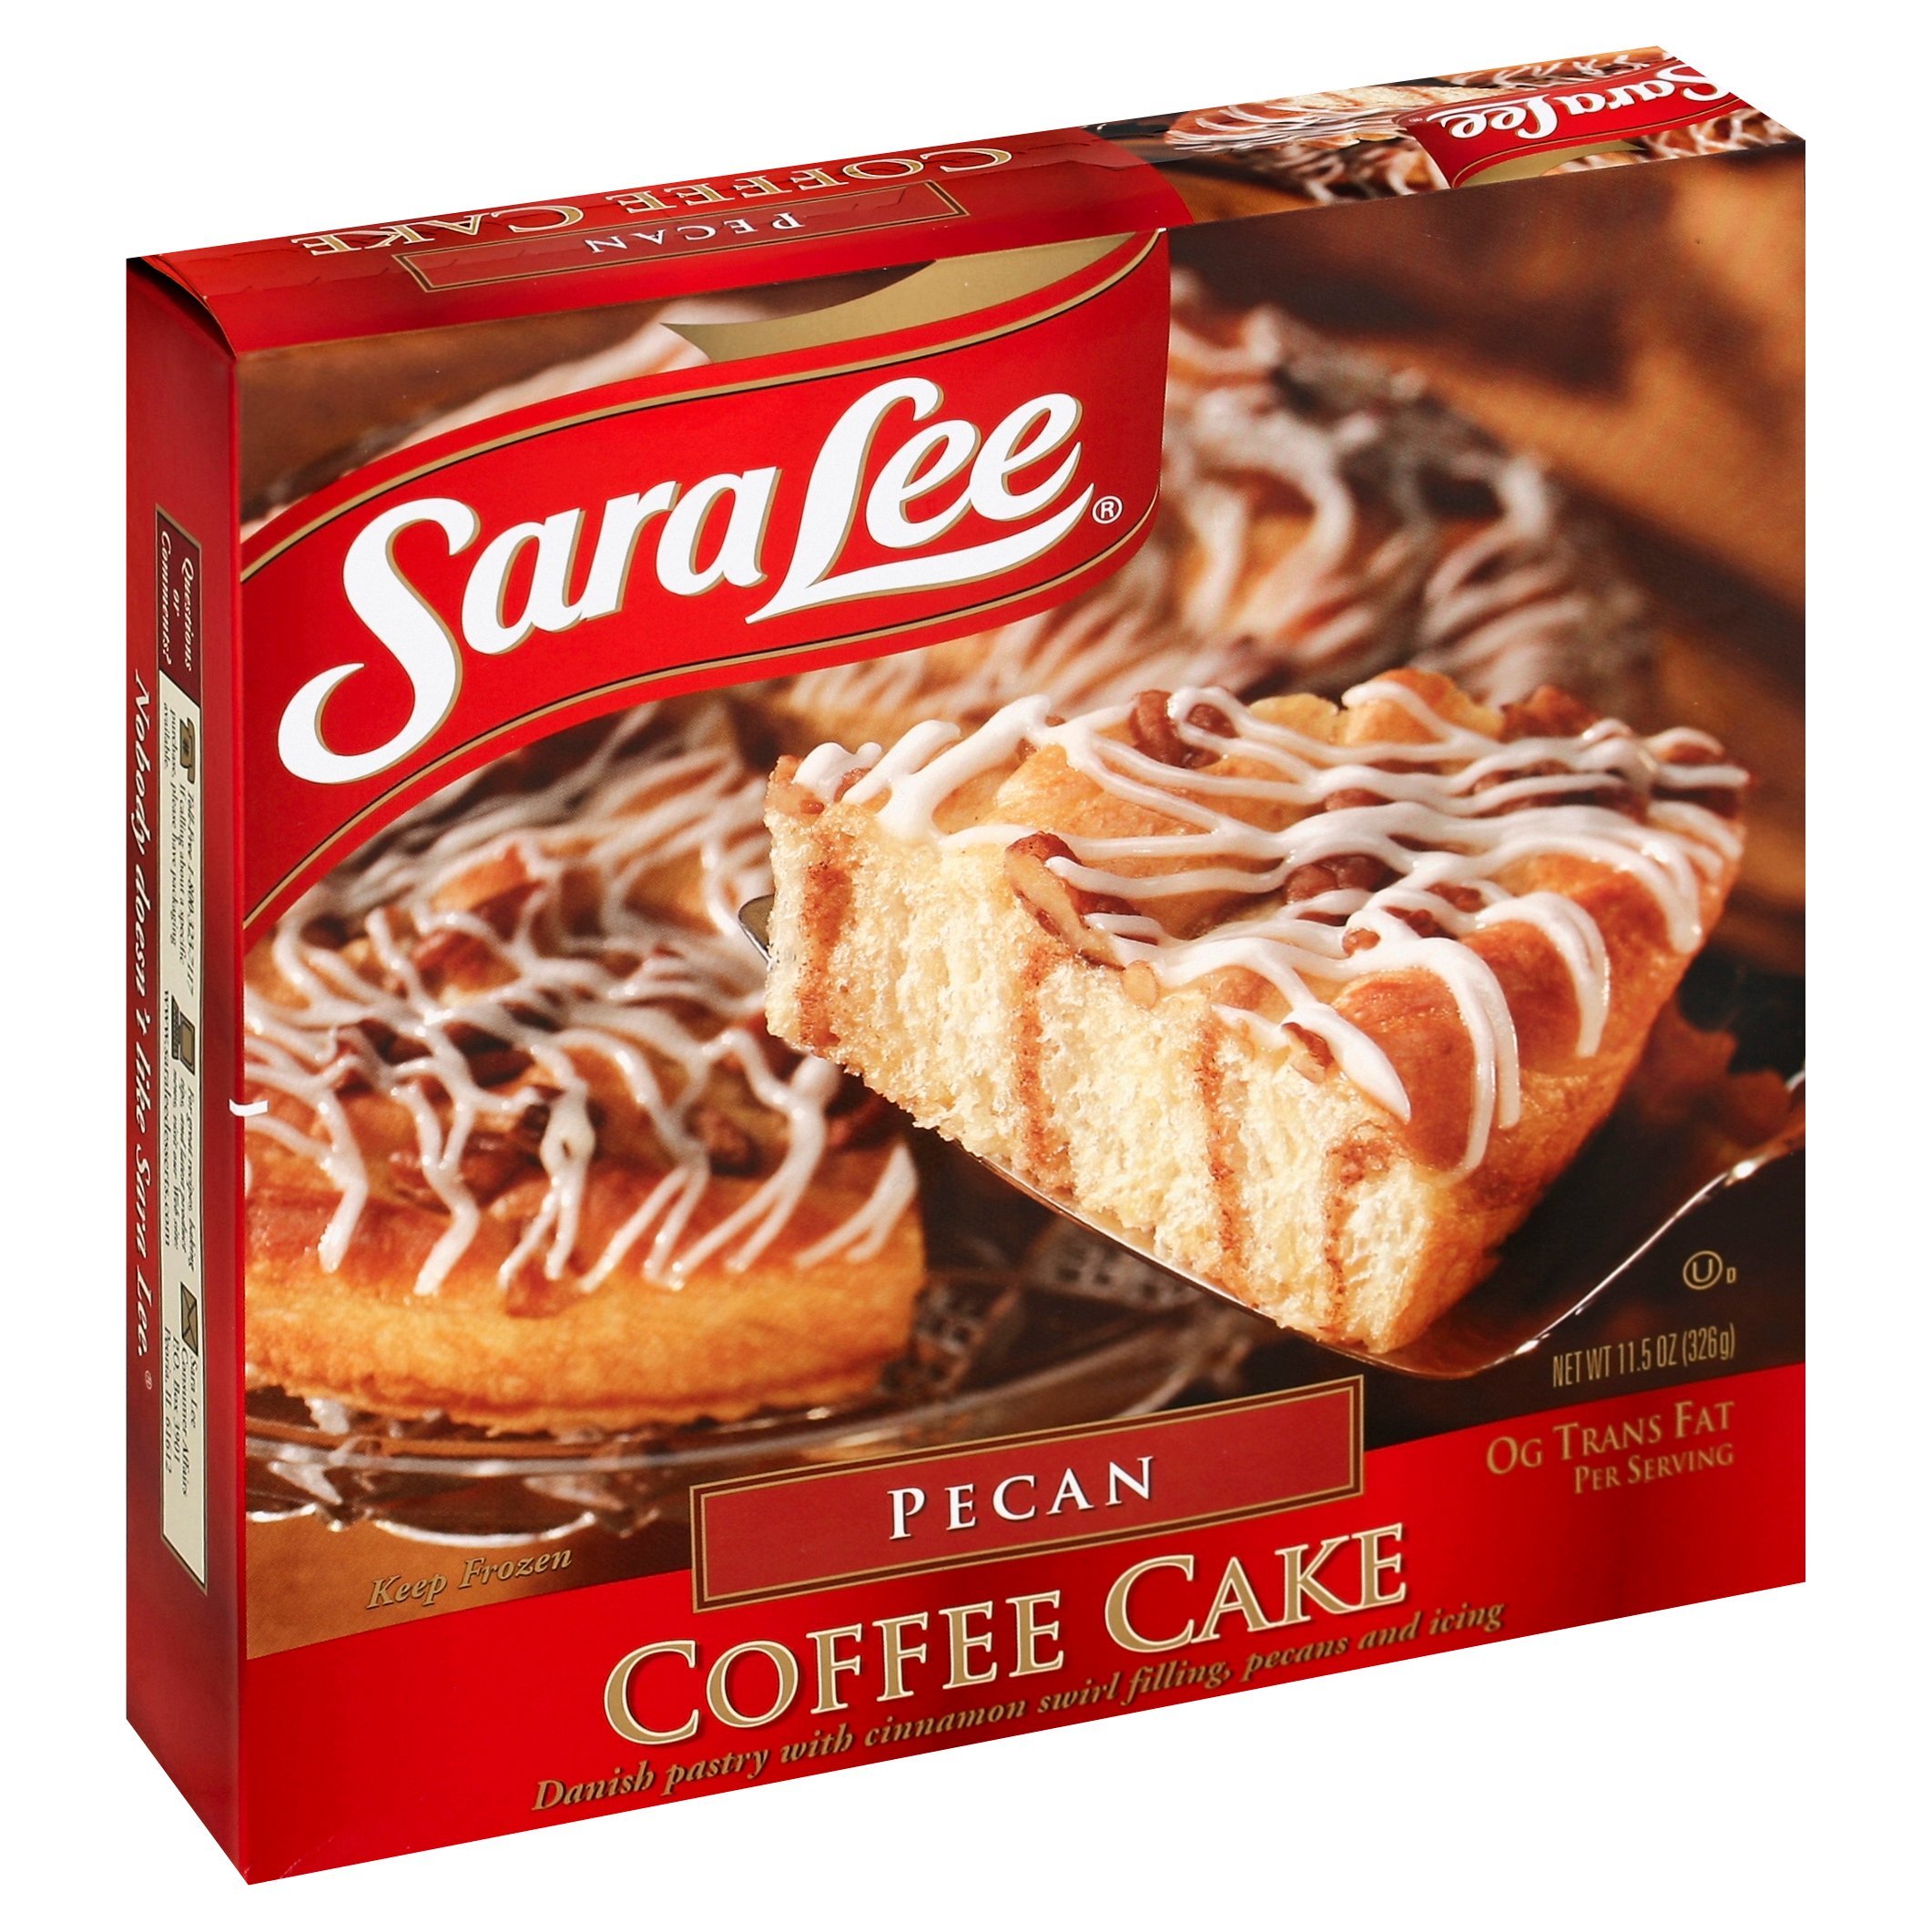 Sara Lee Pecan Coffee Cake - Shop Bread & Baked Goods at H-E-B